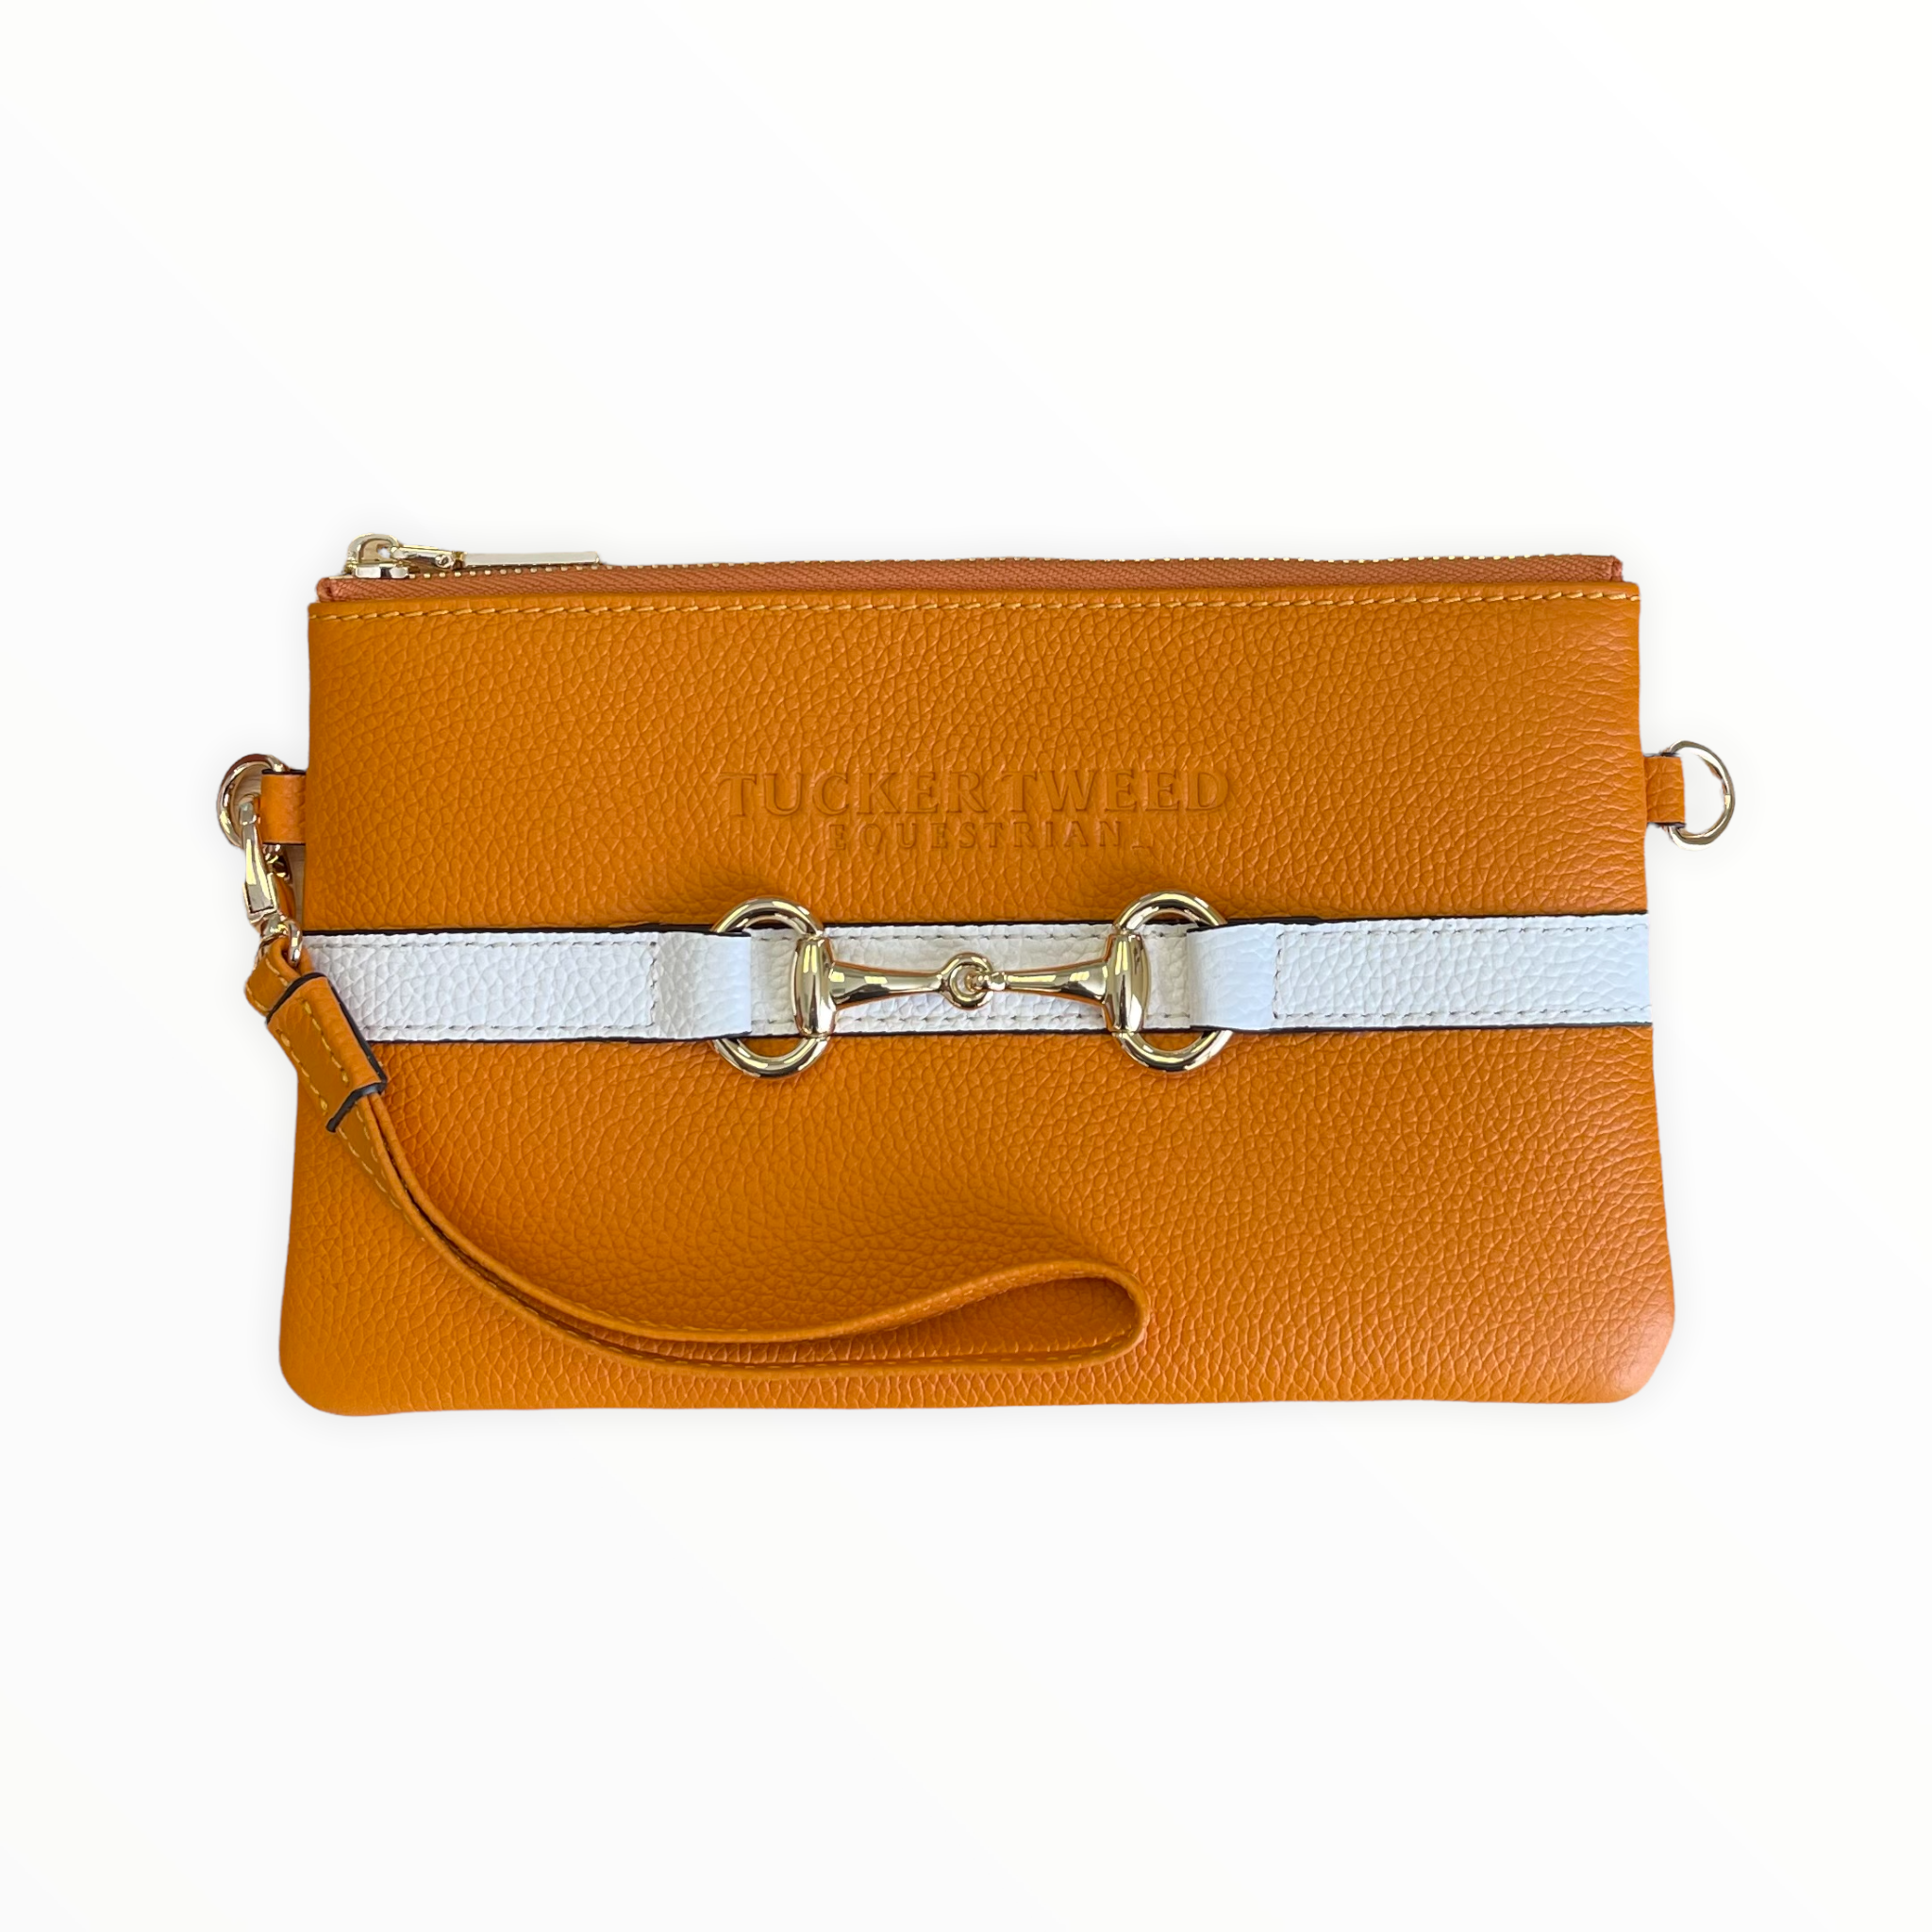 Tucker Tweed Leather Handbags Marigold/White The Wellington Wristlet